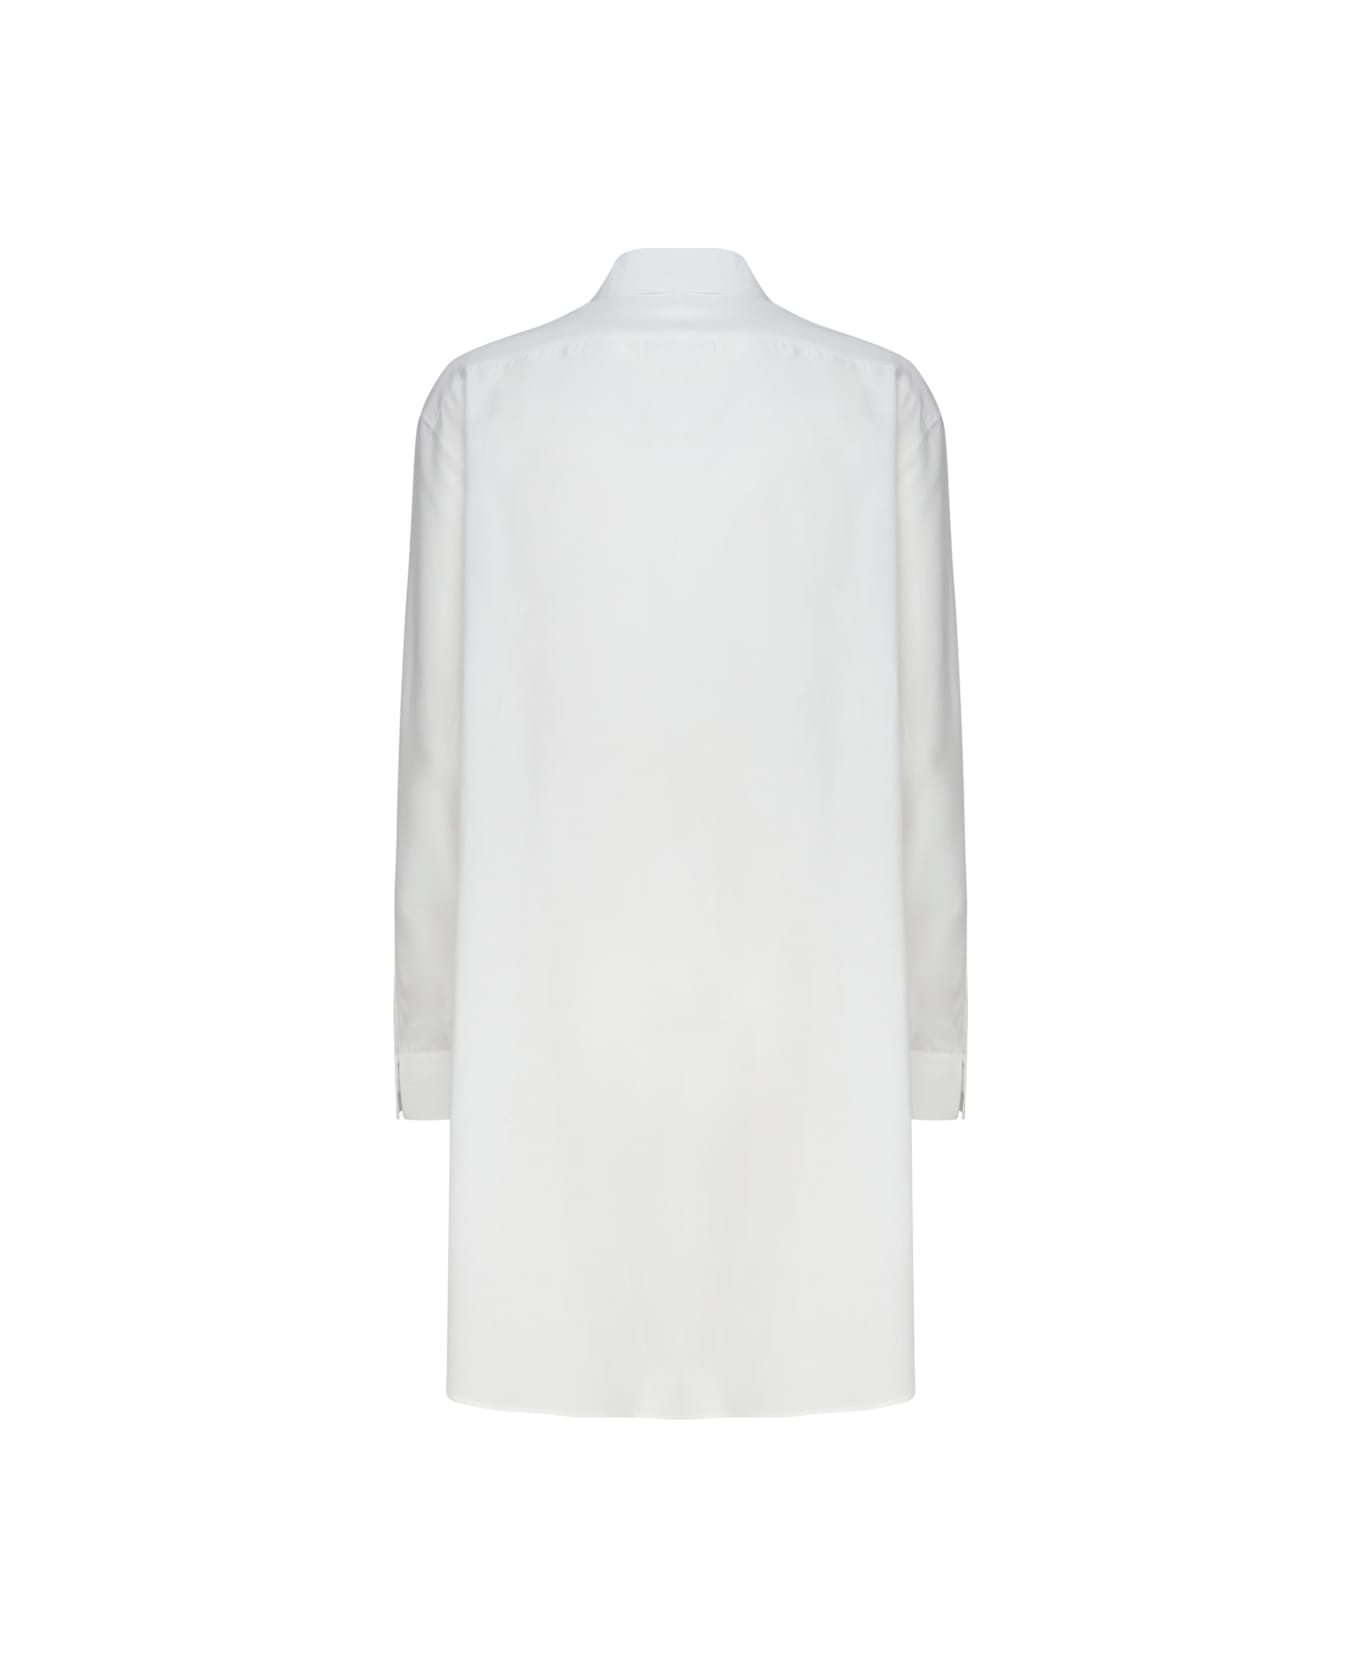 Loewe Shirt Dress In Cotton - White/blue